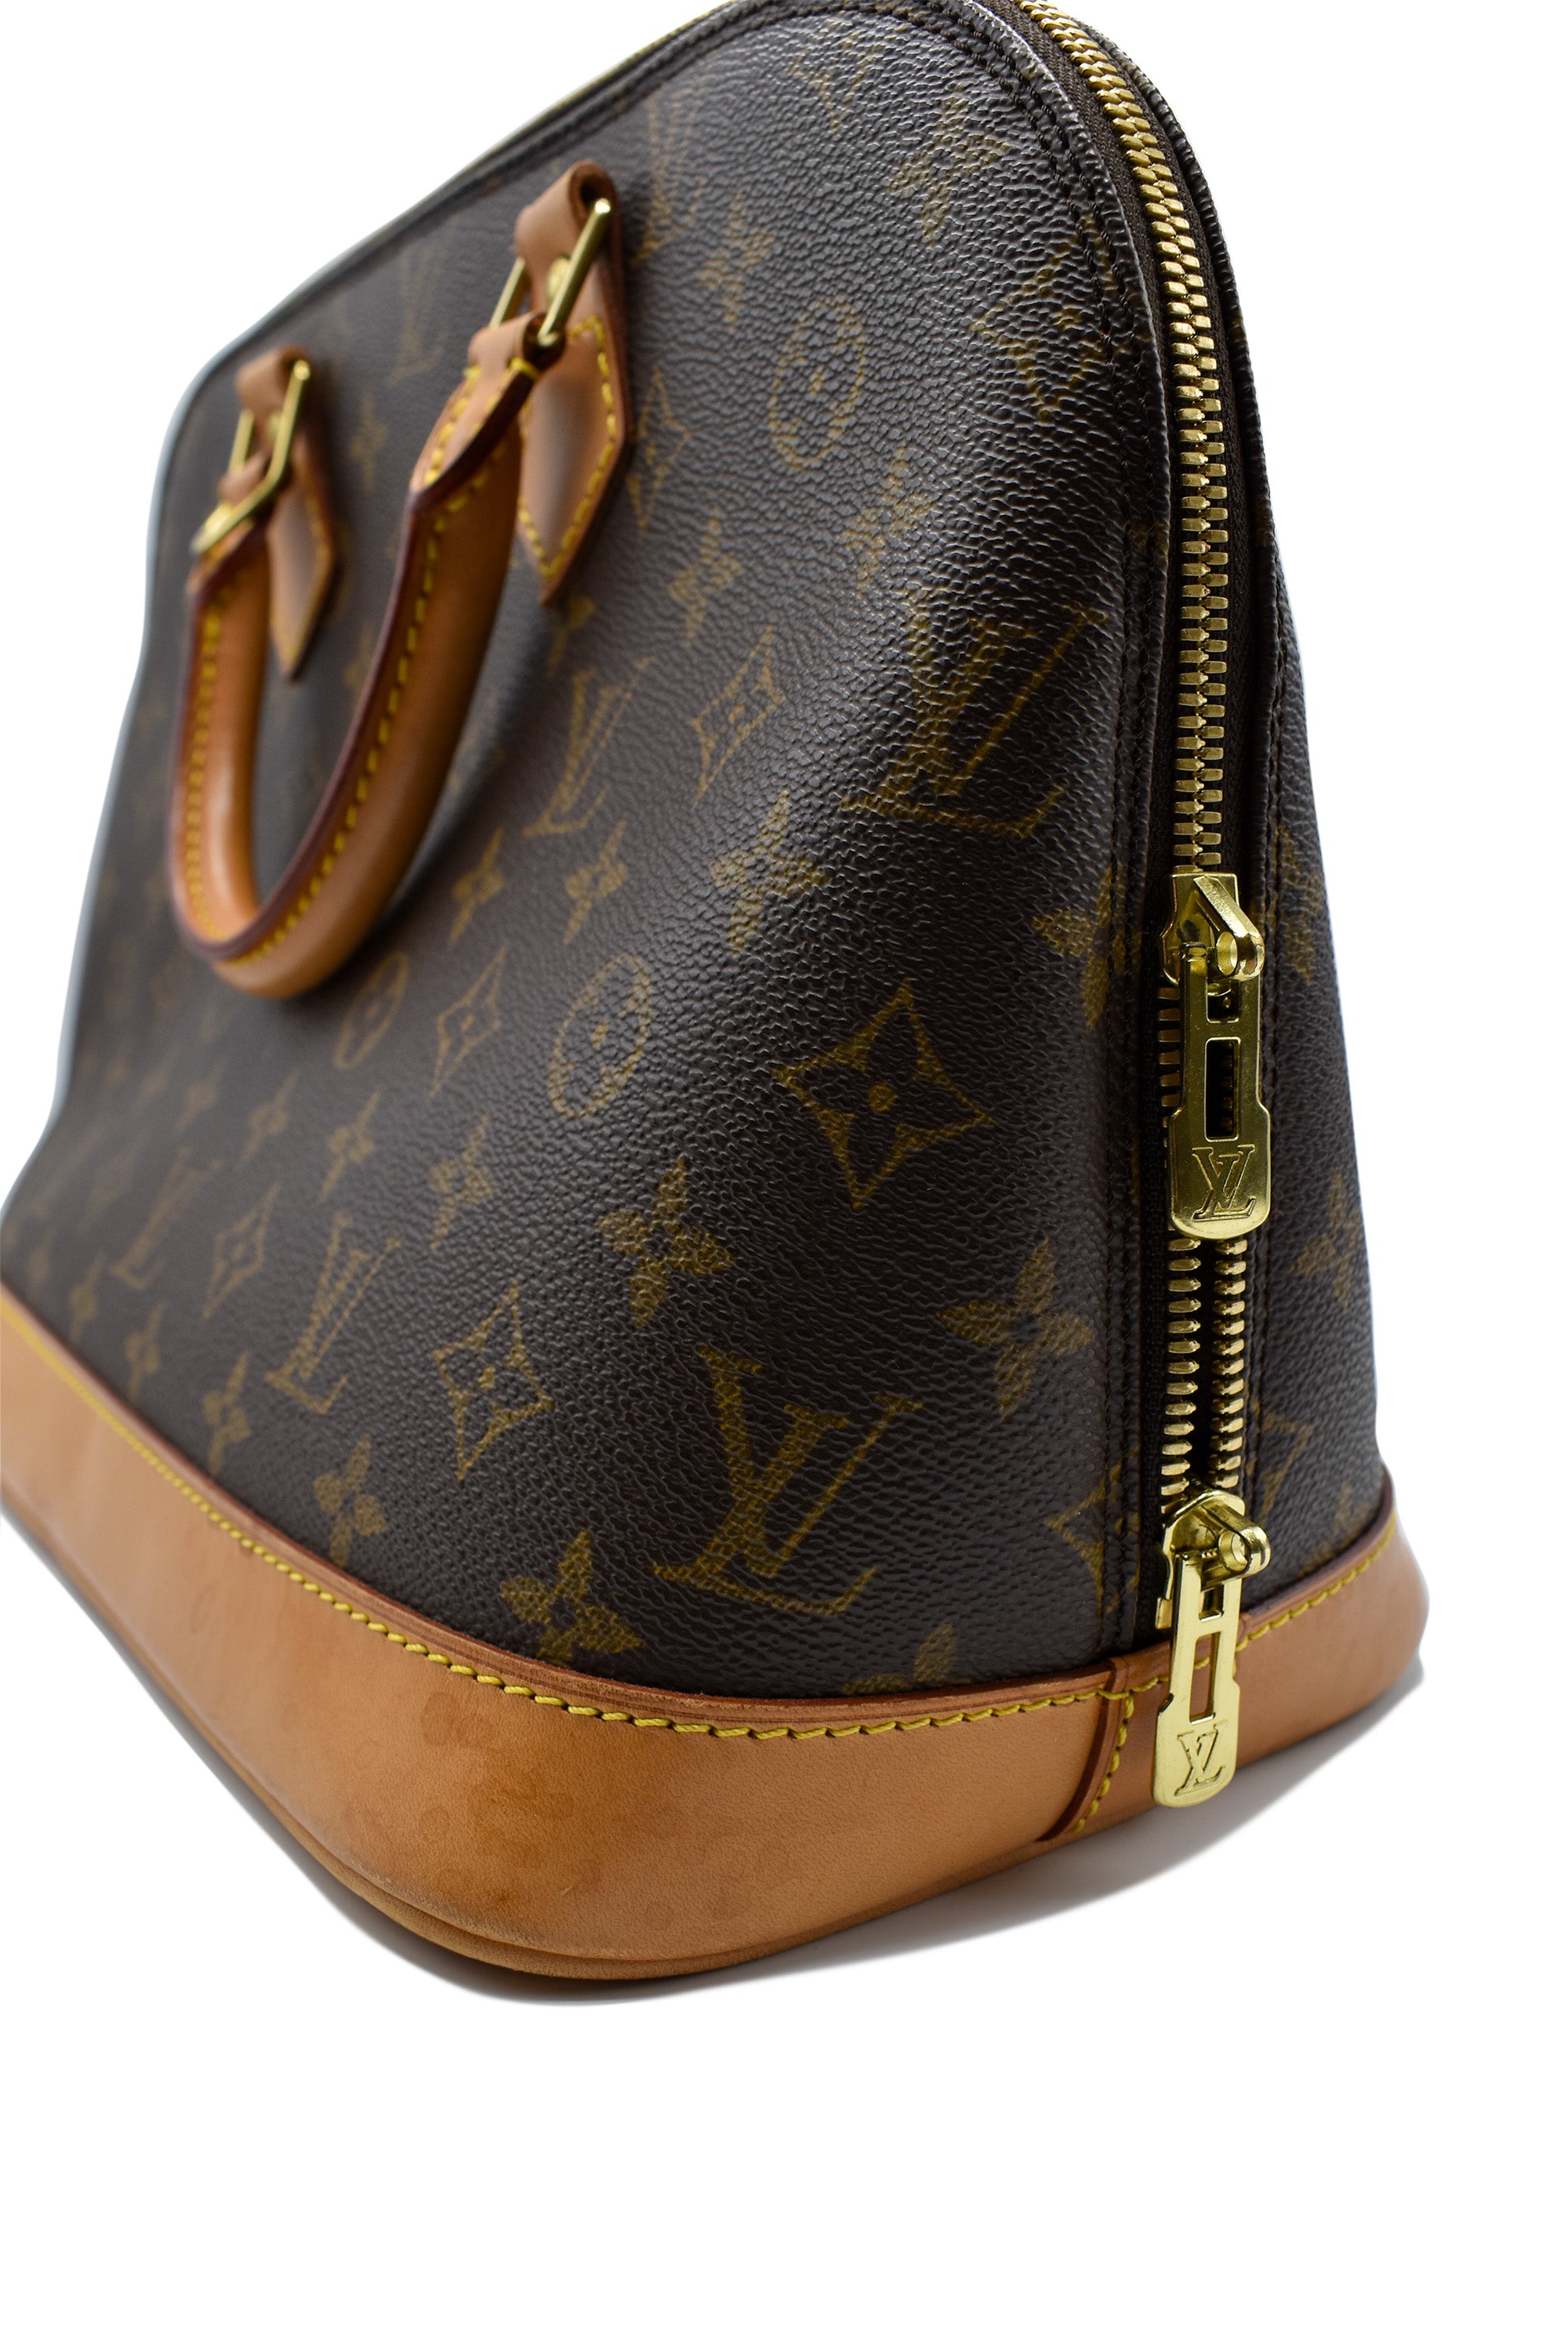 Louis Vuitton - Alma PM- Monogram Canvas - Brown - Women - Handbag - Luxury